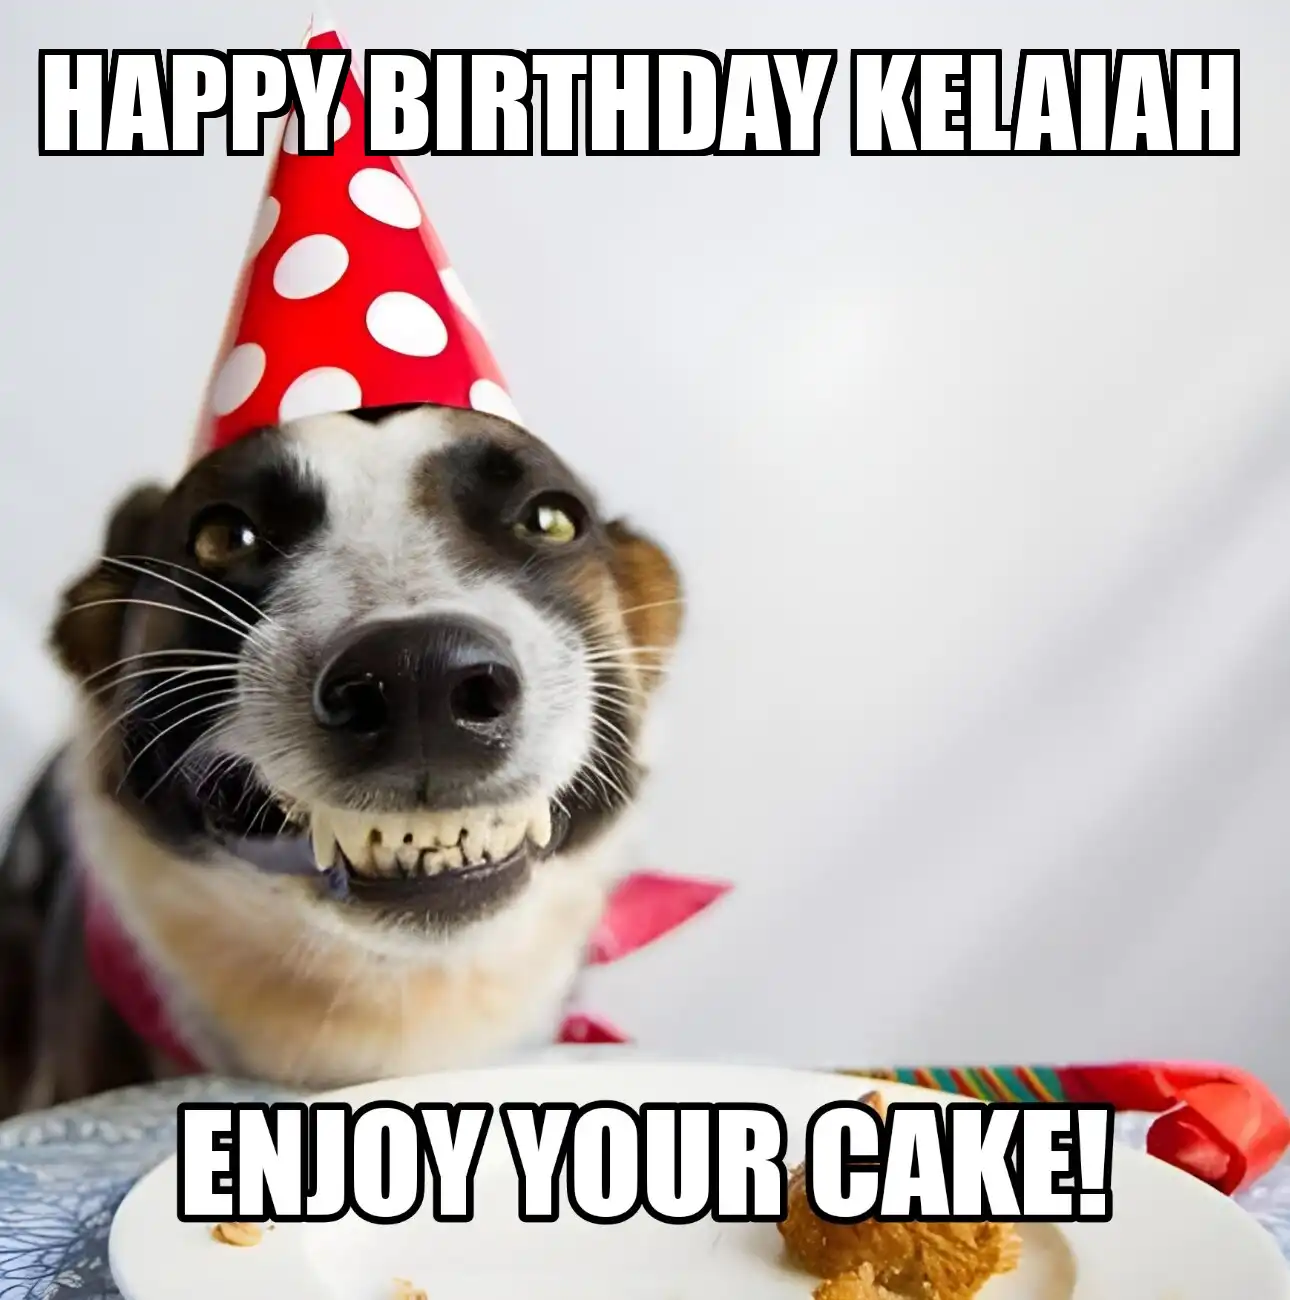 Happy Birthday Kelaiah Enjoy Your Cake Dog Meme